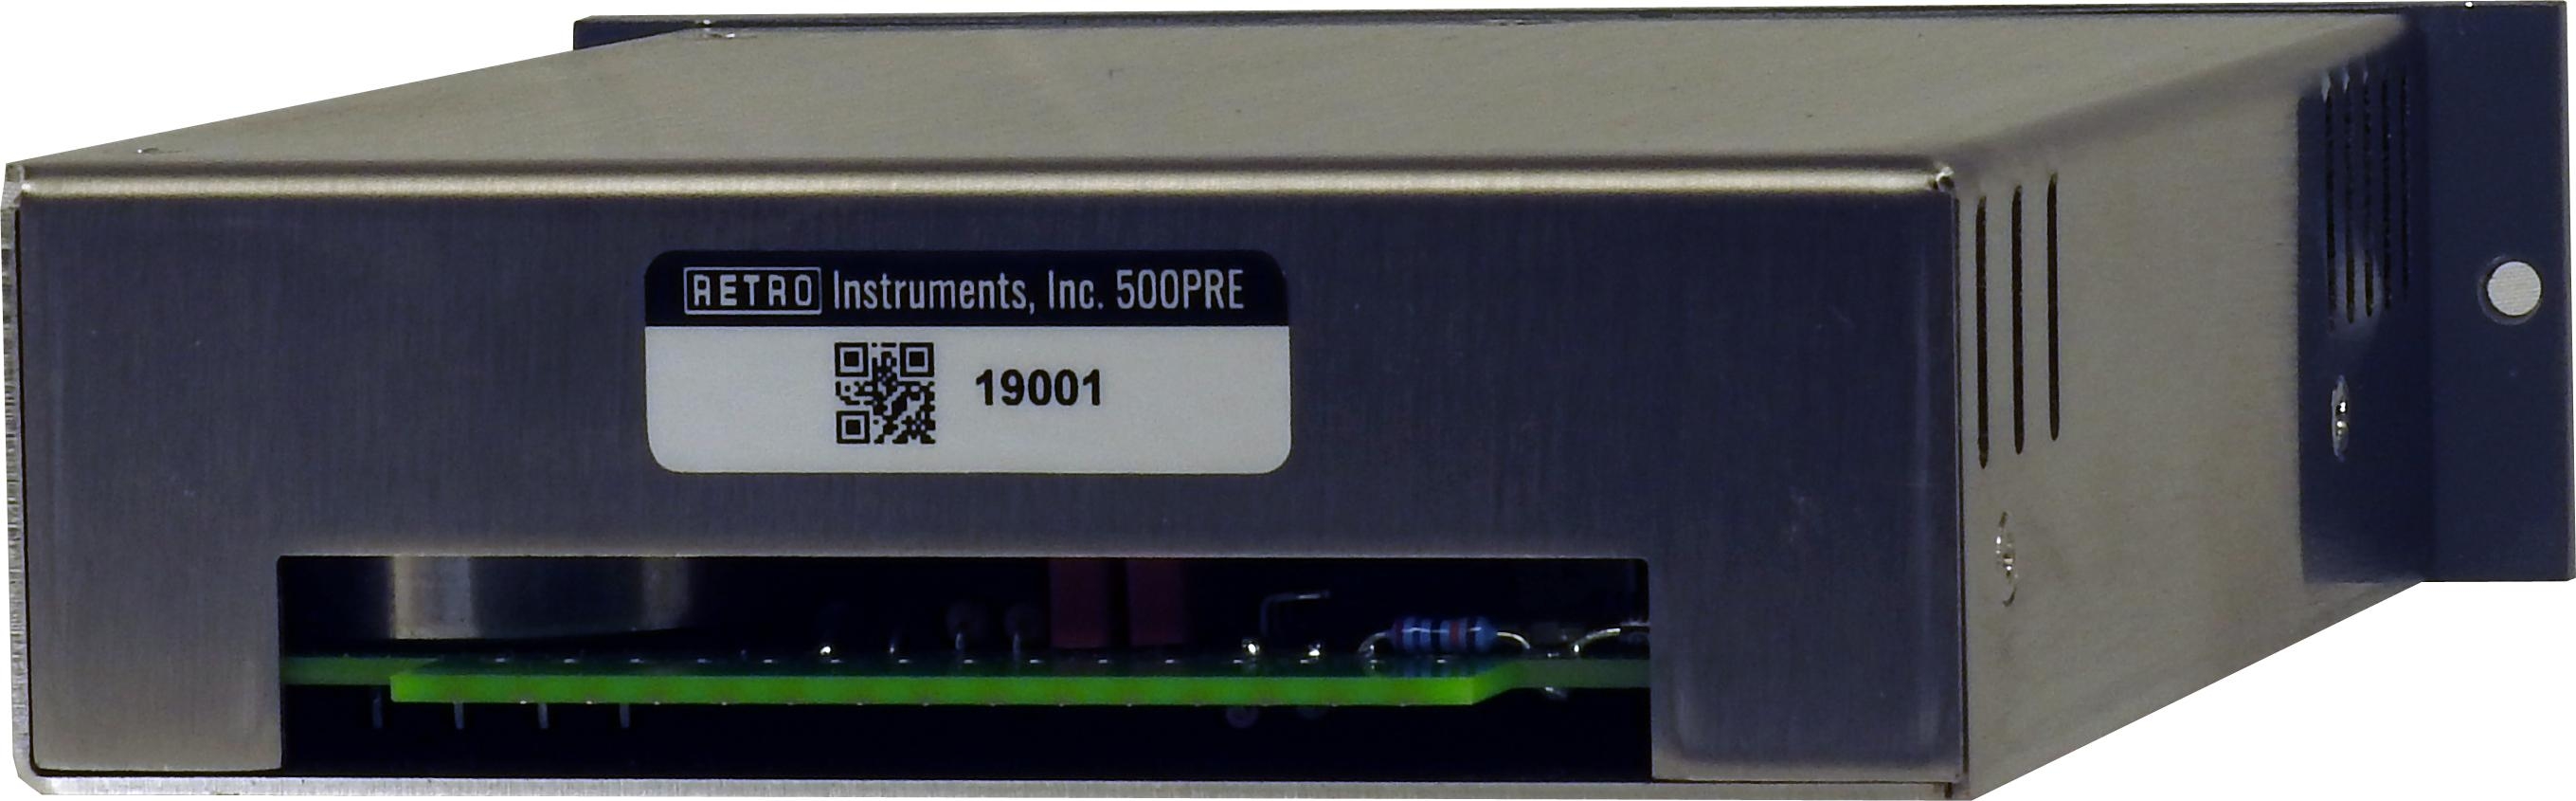 Retro Instruments 500PRE